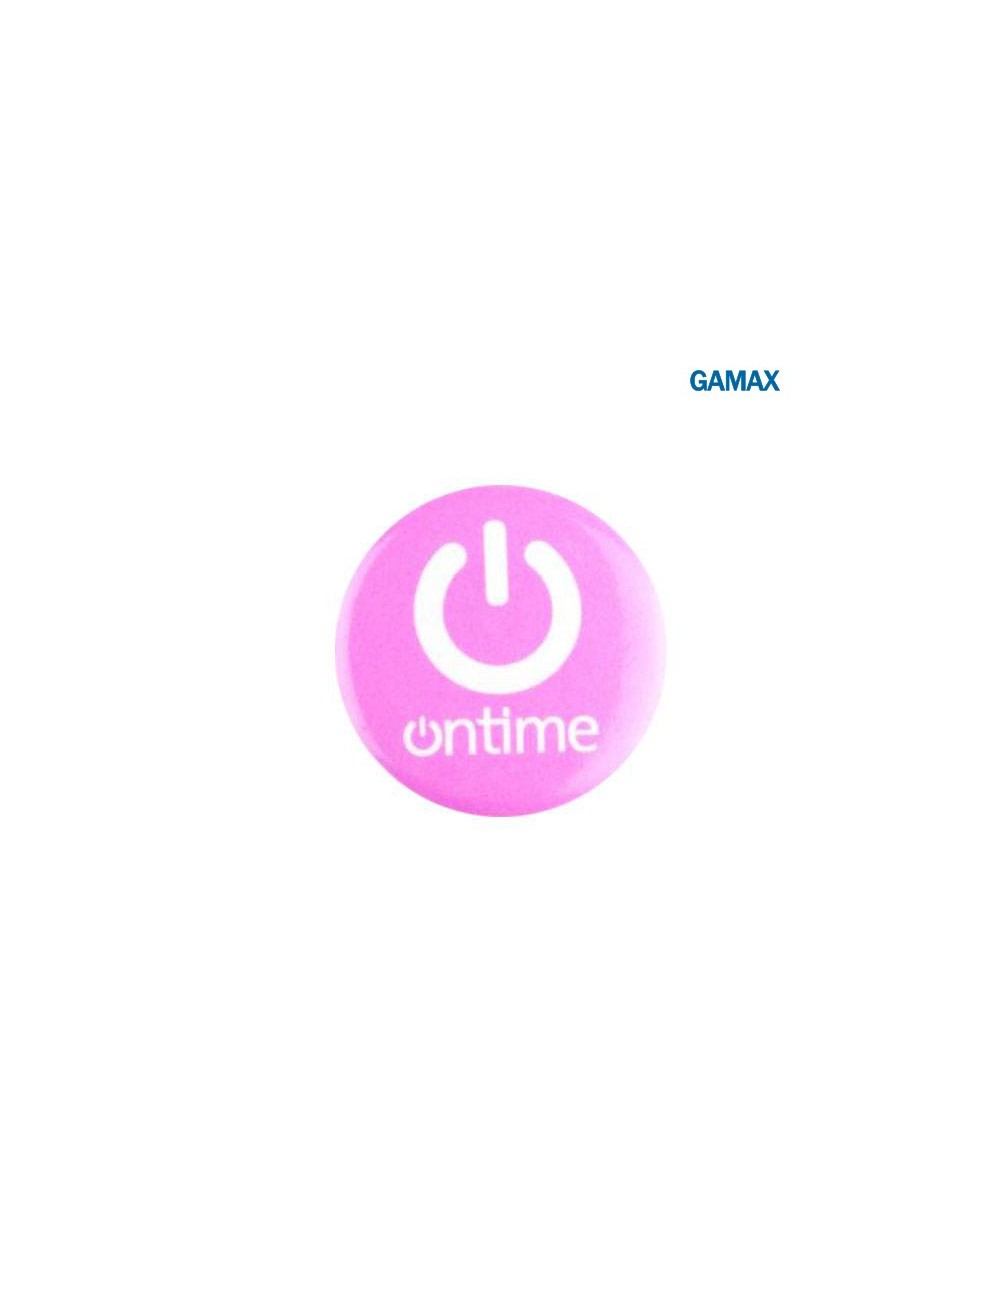 Gamax